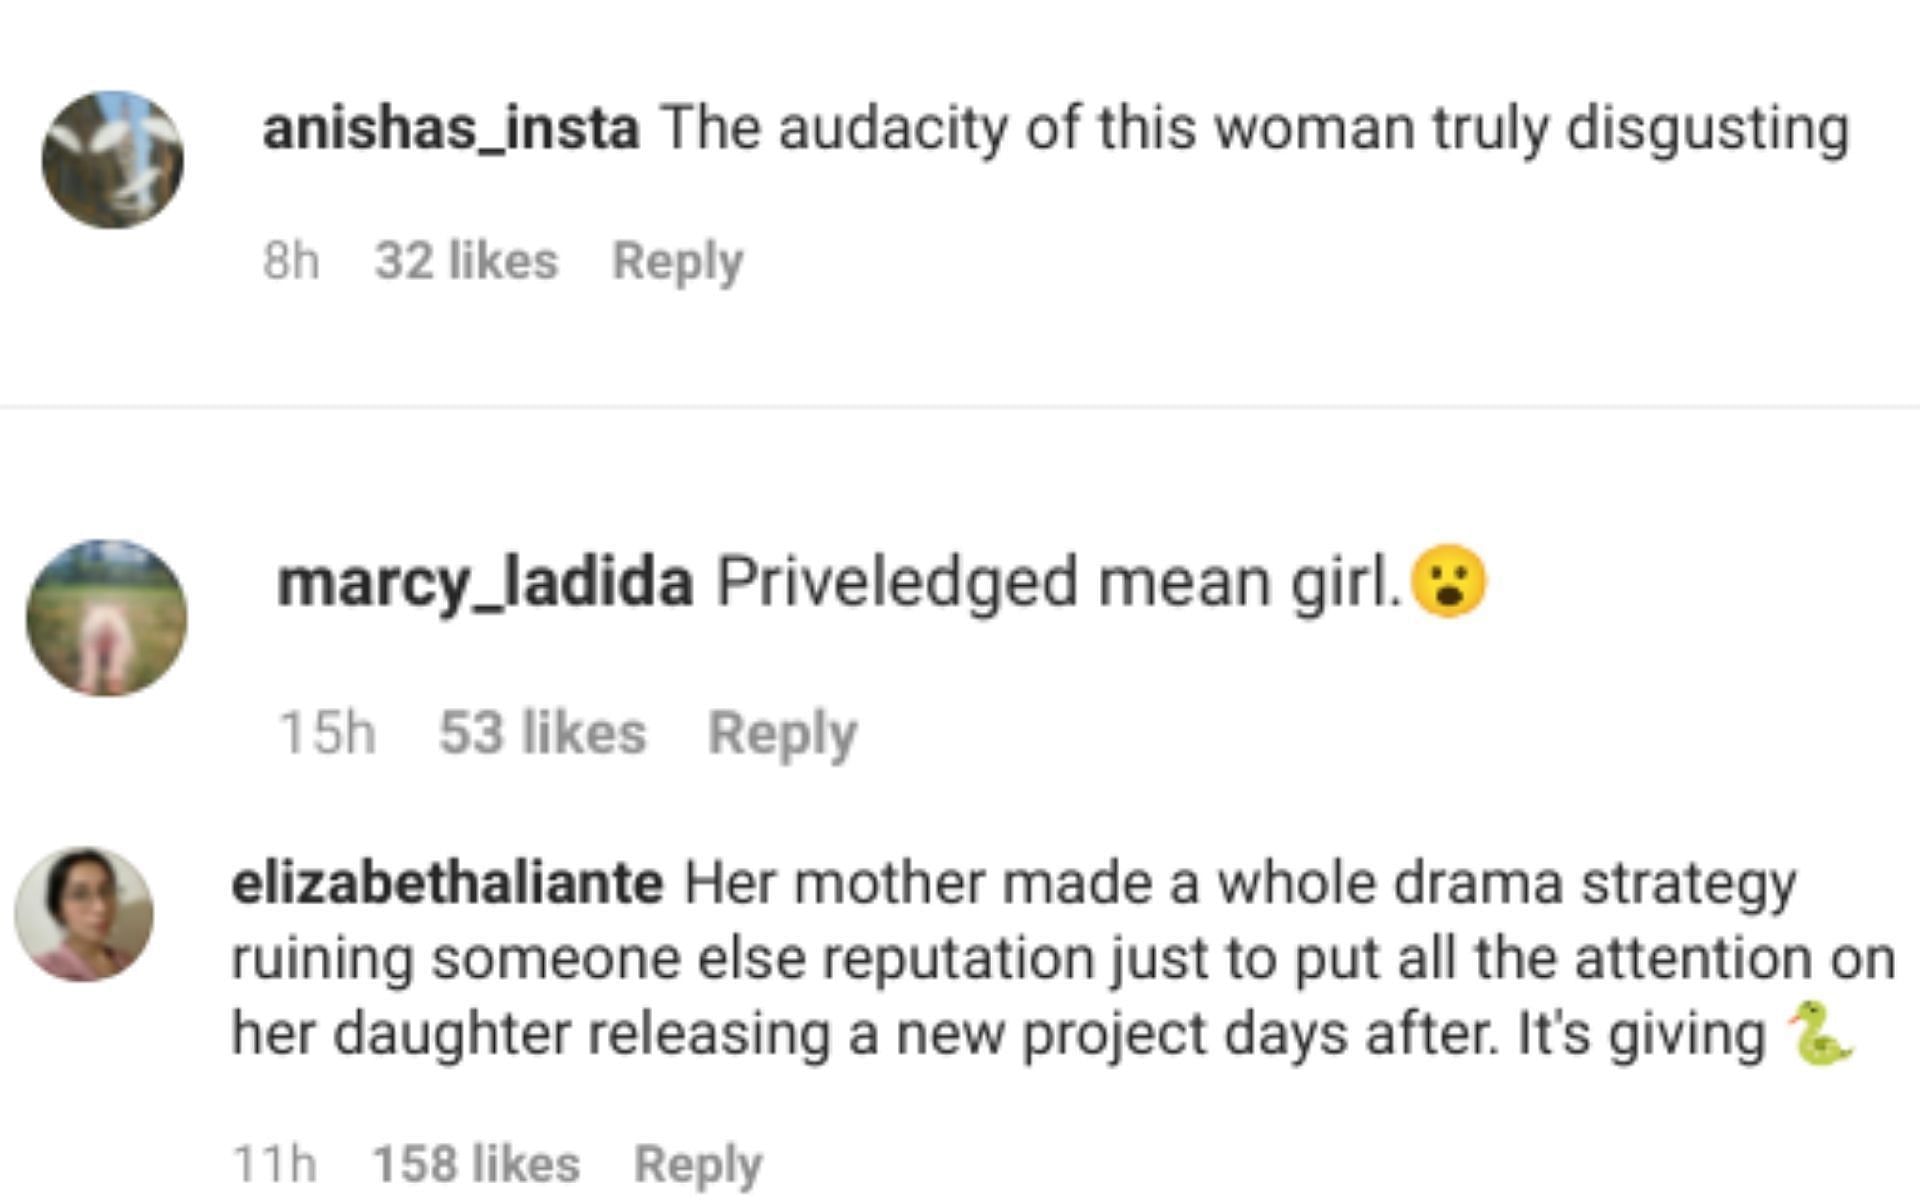 Gigi Hadid faces severe backlash ahead of Project Runway premiere (Instagram screenshot)